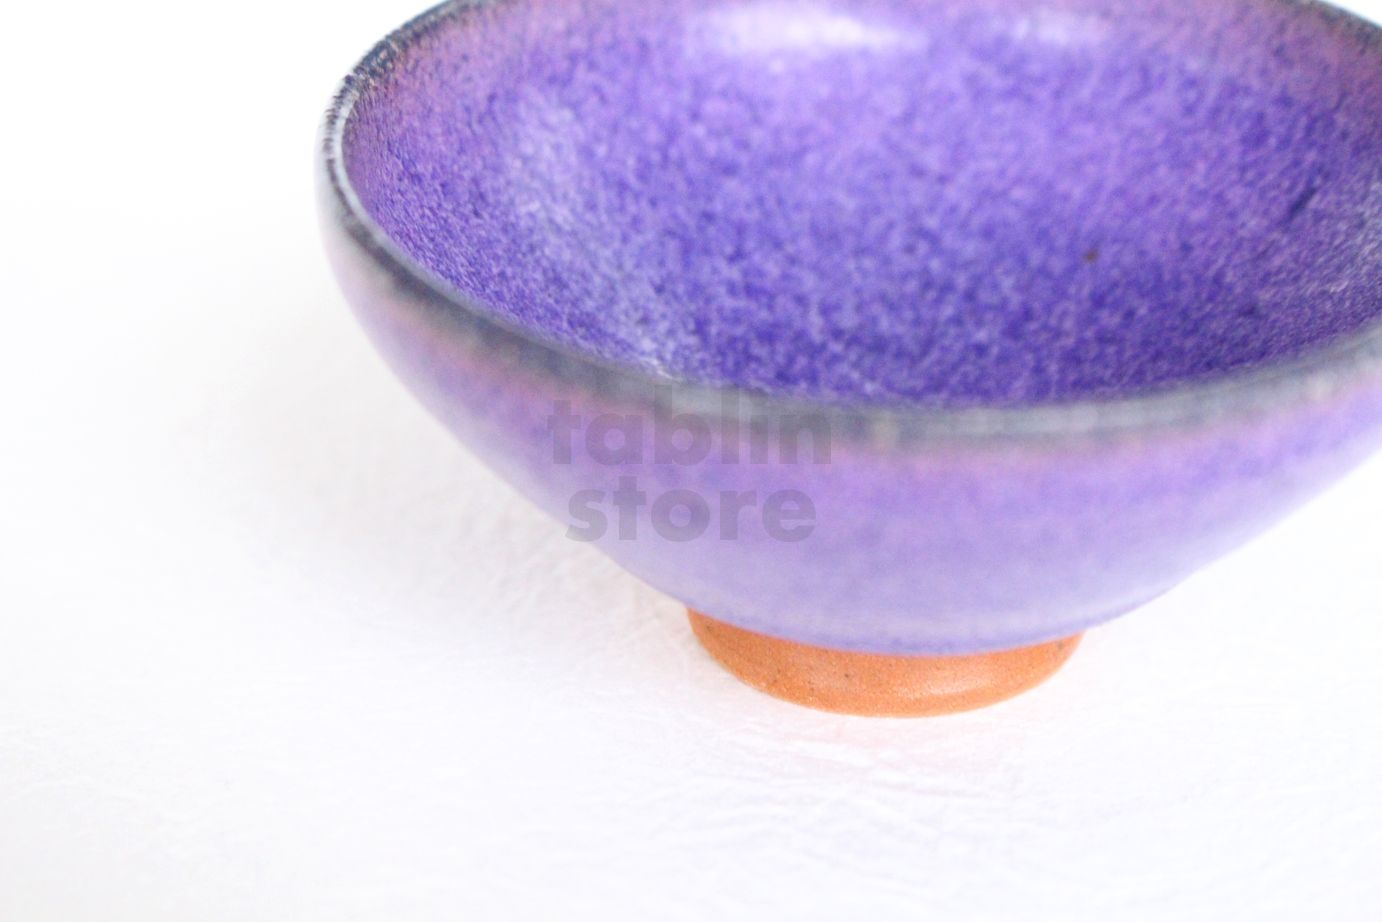 Details about   Guinomi Sake cup Kyo Kiyomizu yaki ware Handcraft Kyoto set of 5 Crystal glaze 